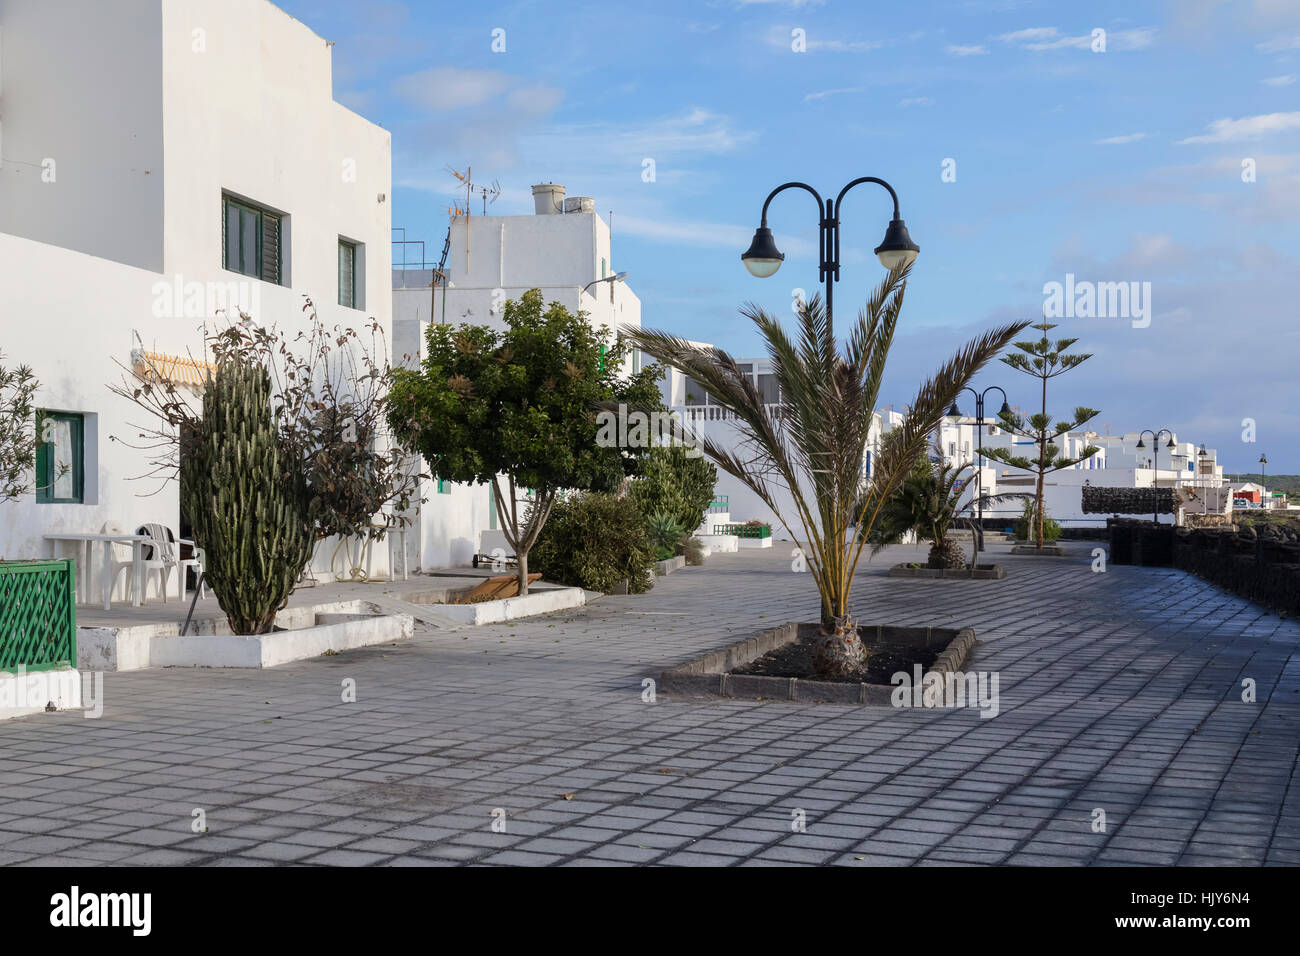 Piscines d'eau de mer, Punta Mujeres, Haria, Lanzarote, îles Canaries, Espagne Banque D'Images